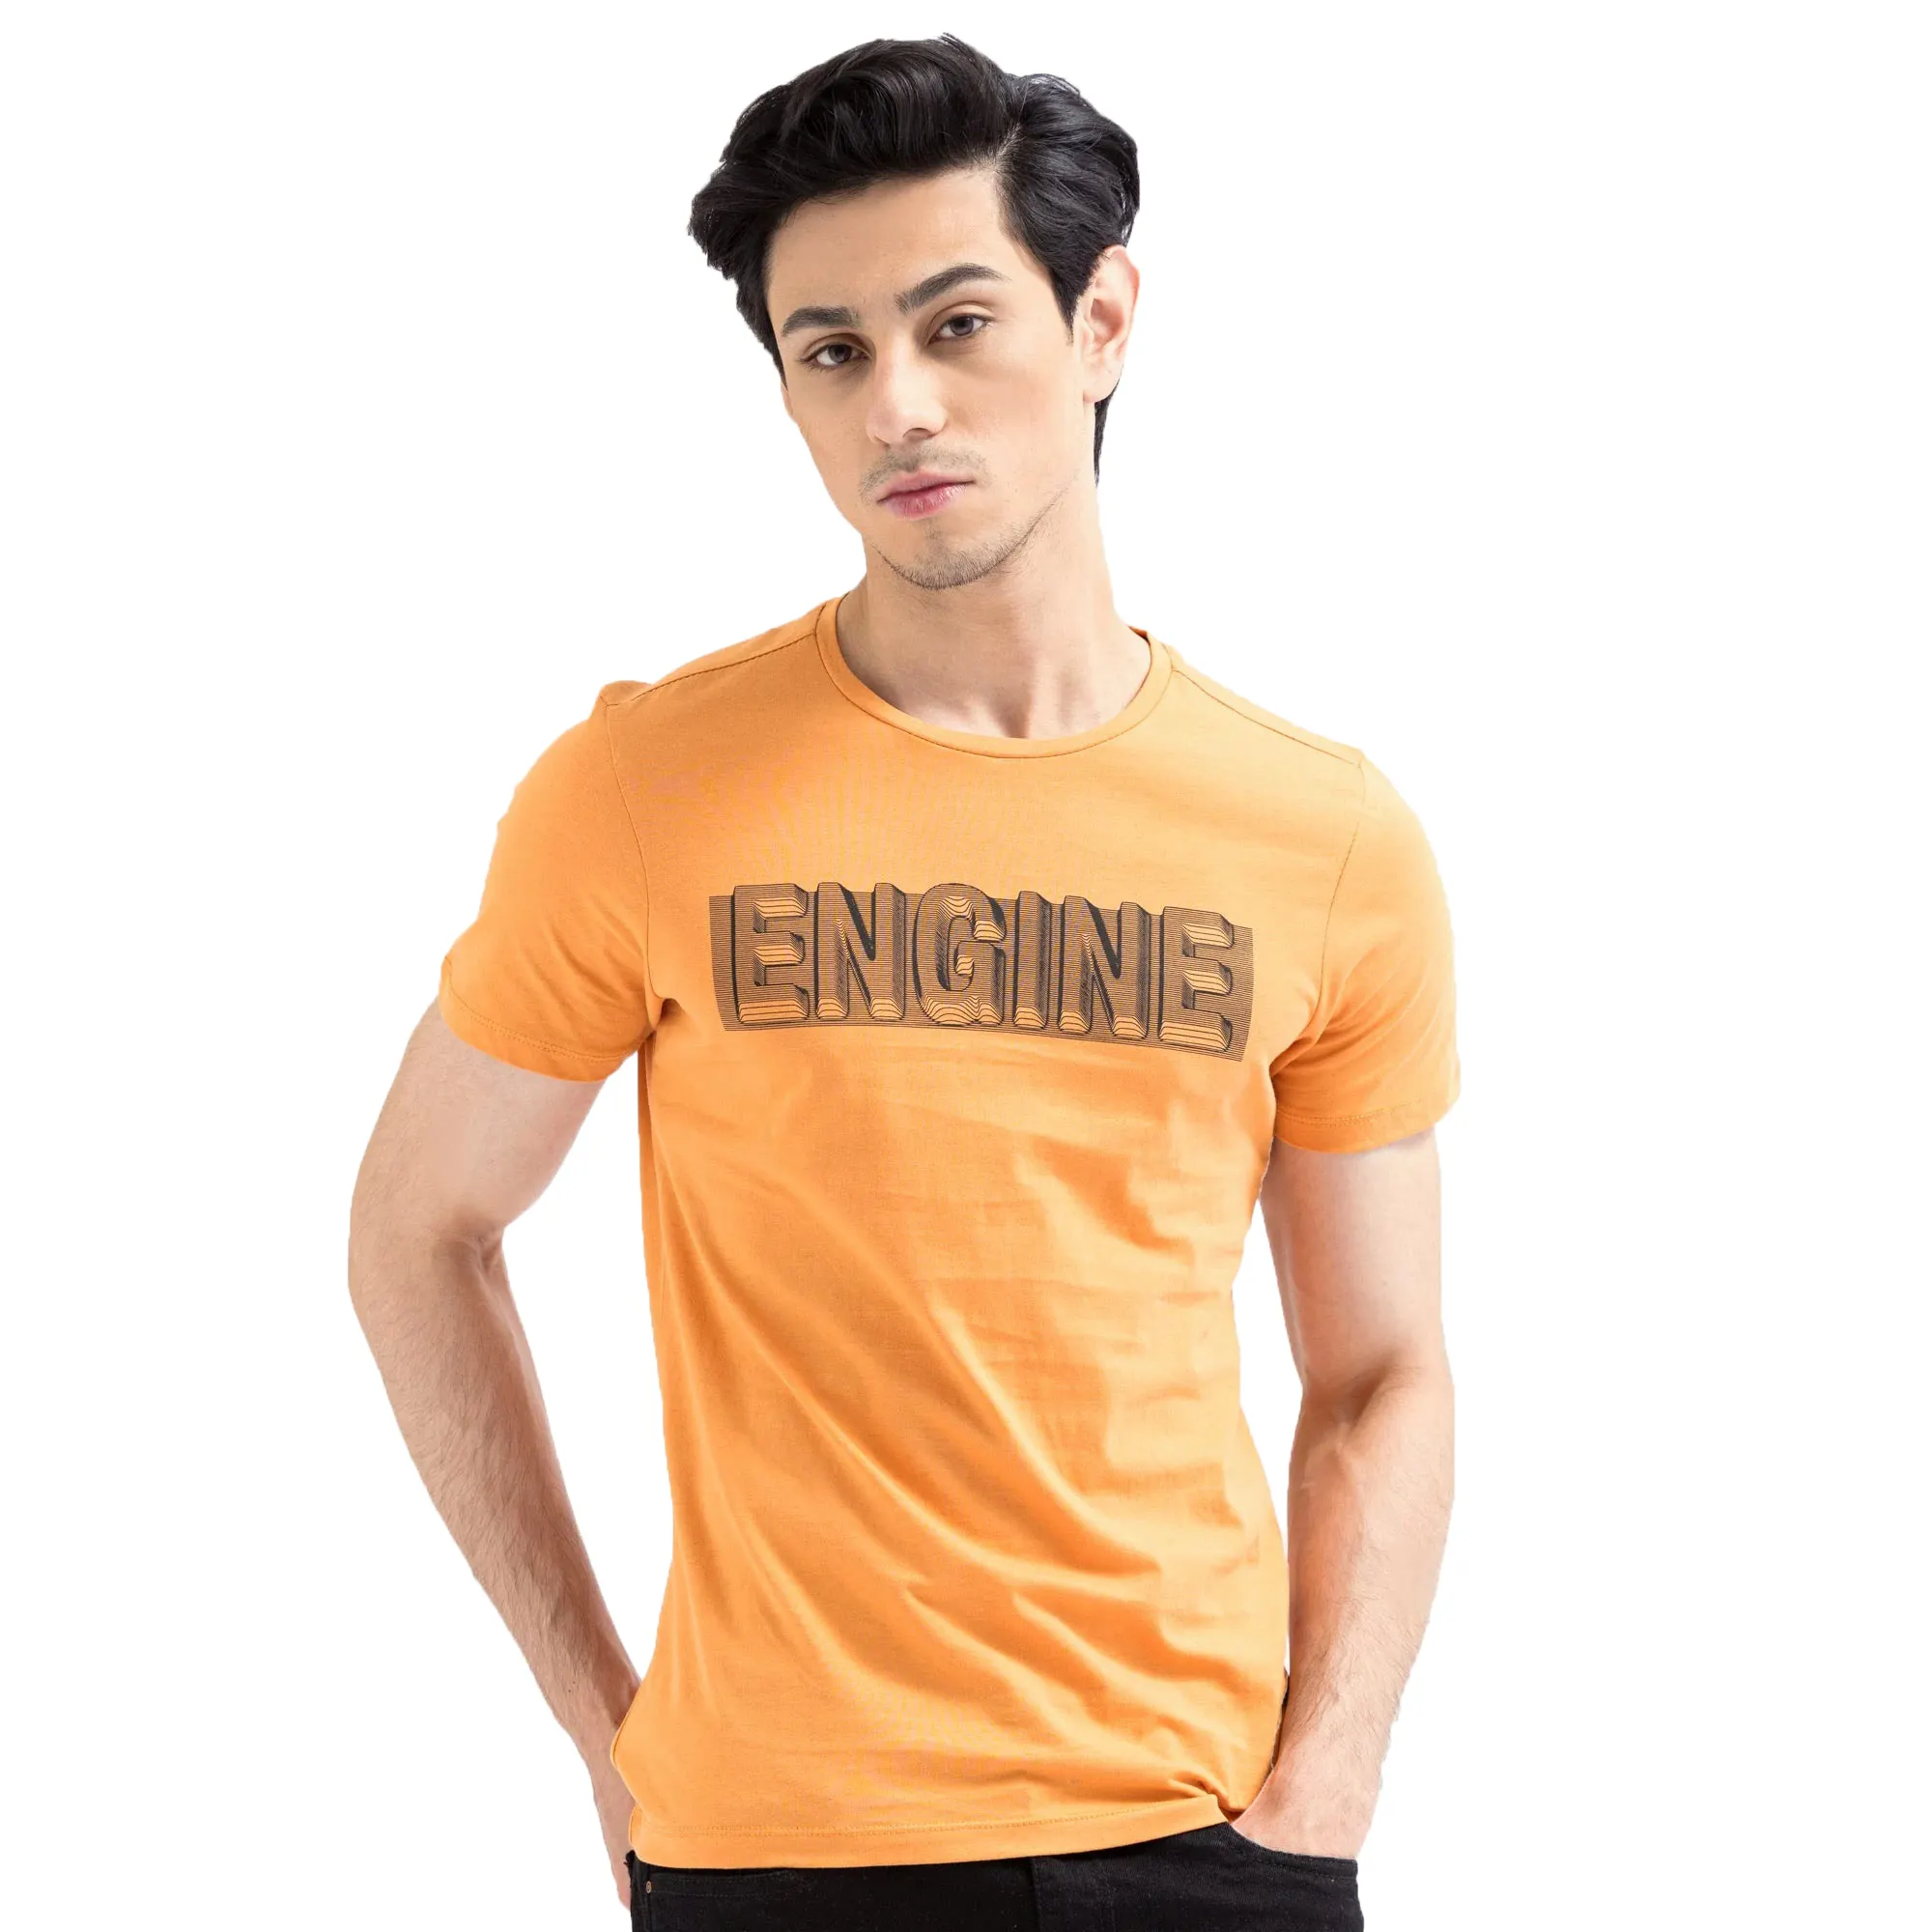 T-shirt Hip Hop Wholesale High Quality T-shirt Short Sleeve Funny T Shirt Casual Streetwear Cool Guy Fashion Tops